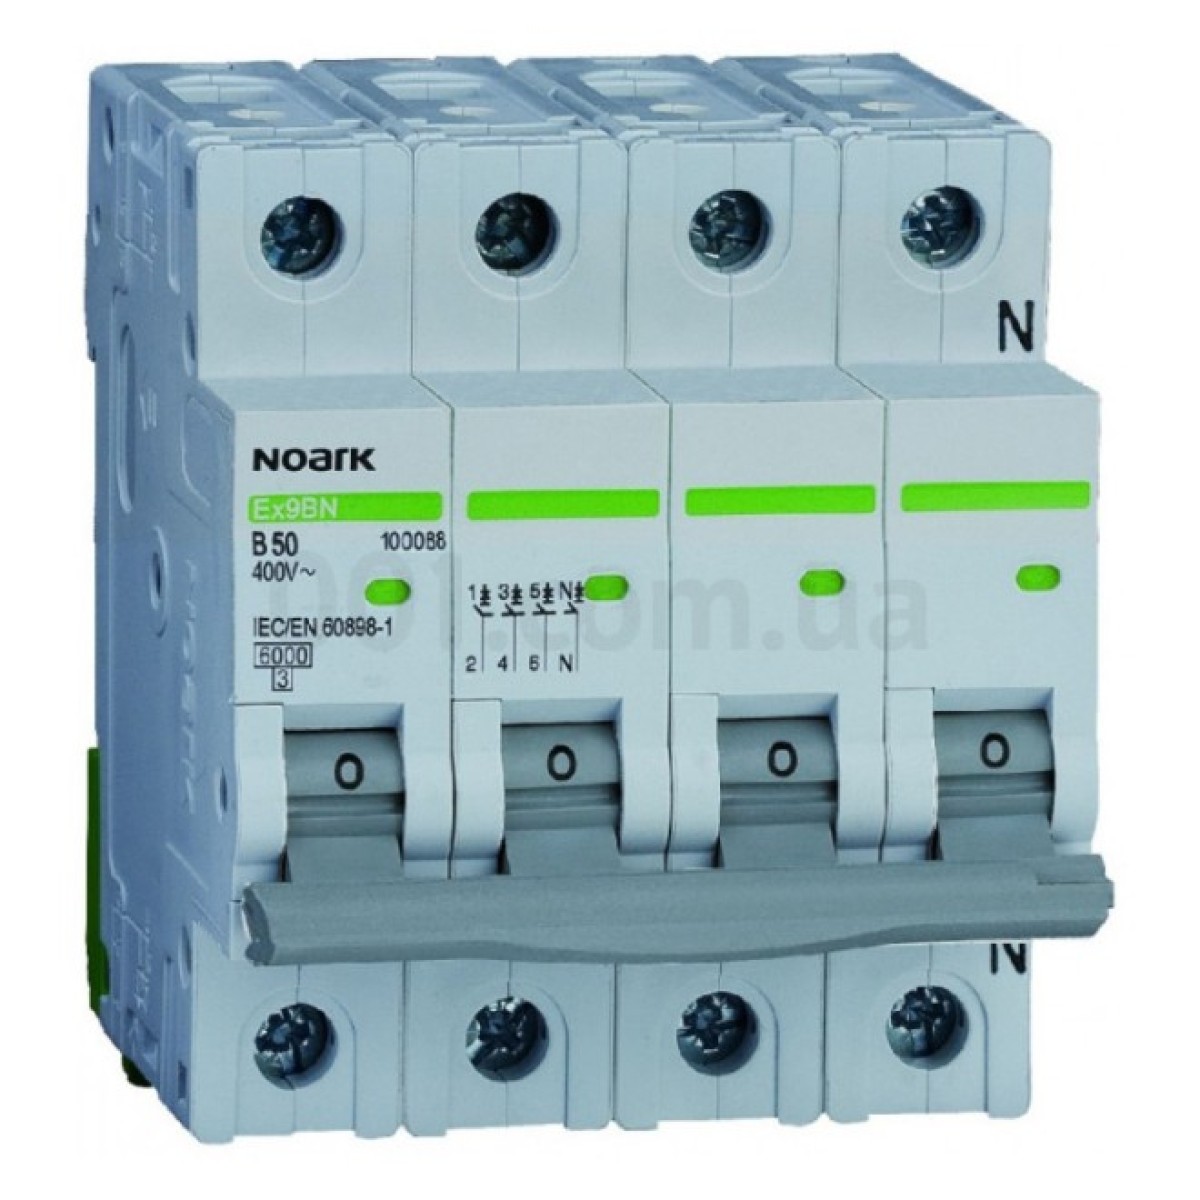 Модульный автоматический выключатель Ex9BN 6kA хар-ка C 3A 3P+N, NOARK 256_256.jpg